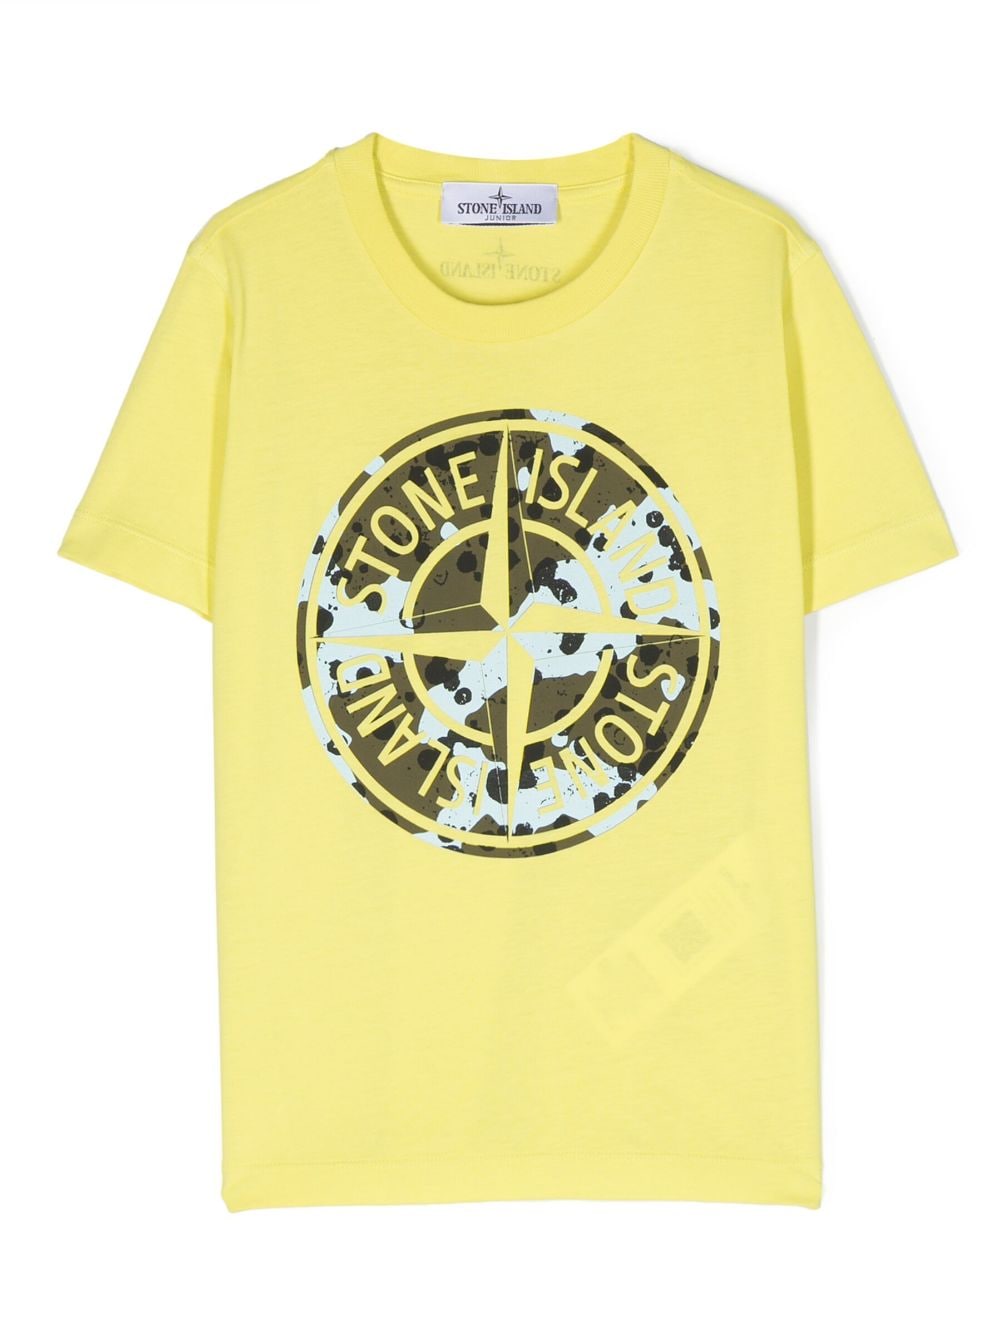 T-shirt gialla in cotone con stampa logo Bussola